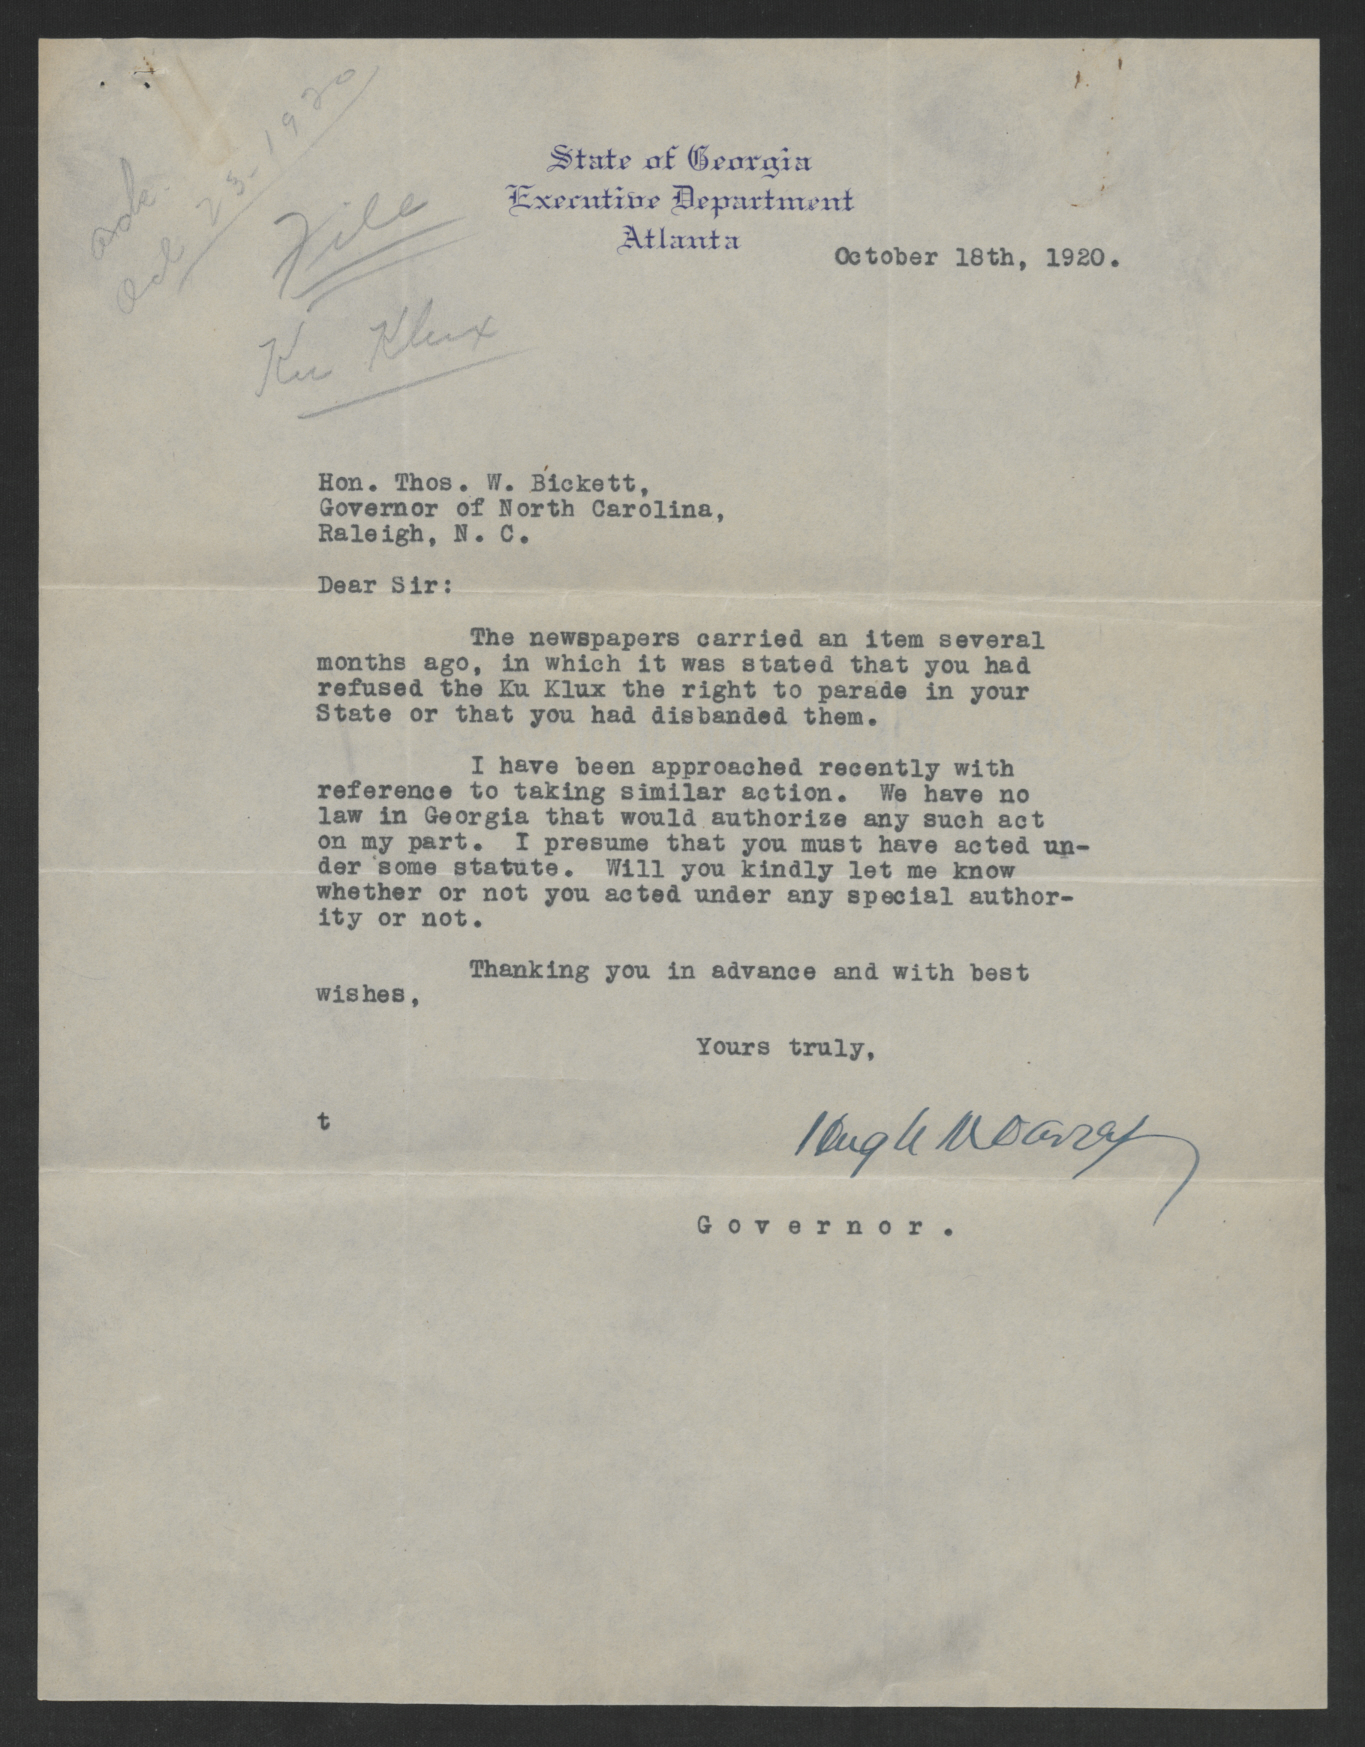 Letter from Hugh M. Dorsey to Thomas W. Bickett, October 18, 1920